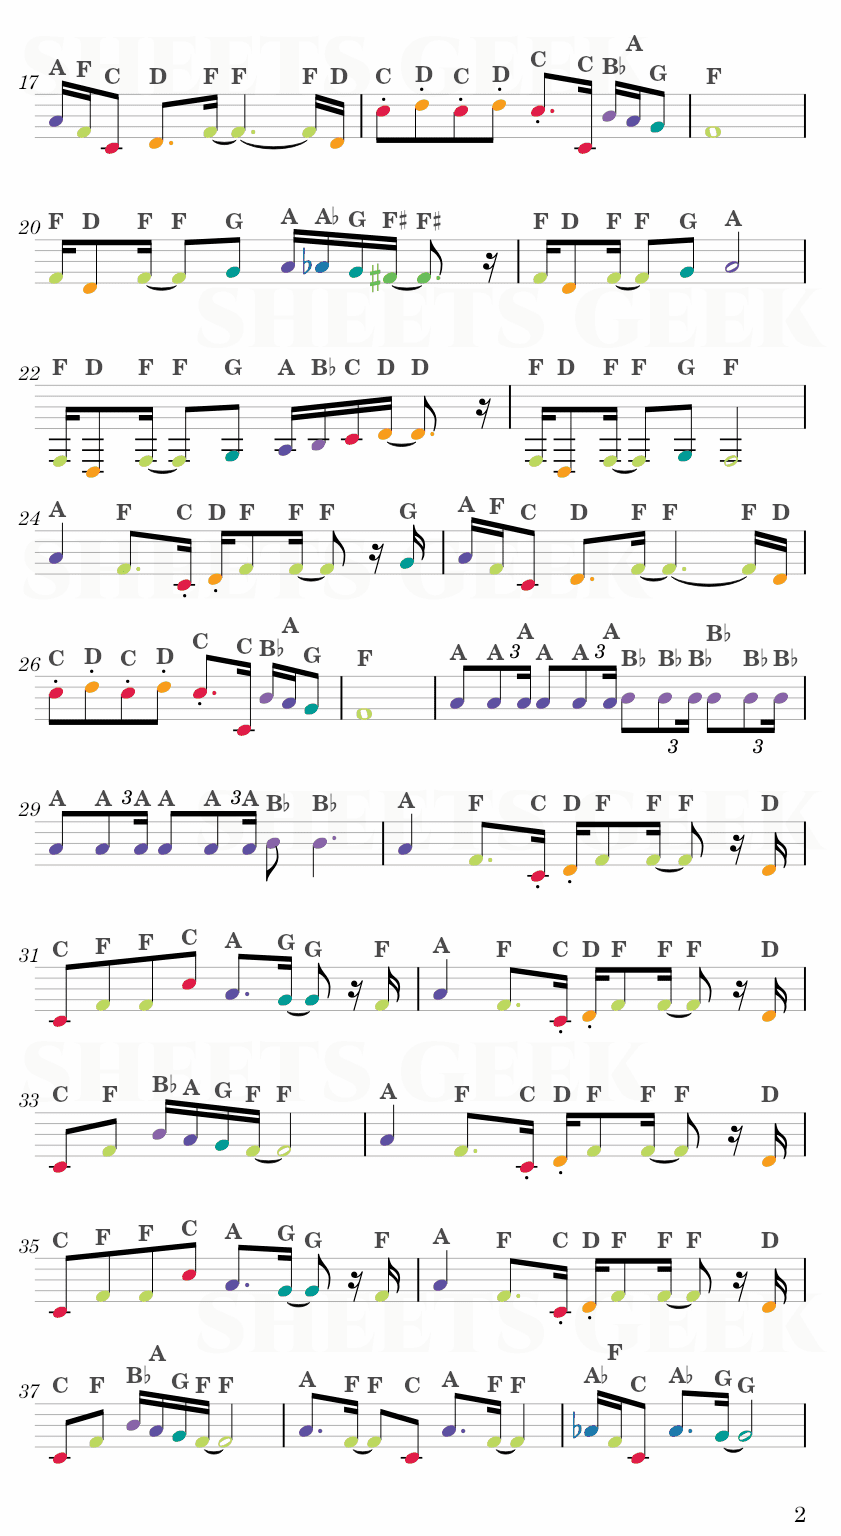 Overworld Theme - Super Mario World Easy Sheet Music Free for piano, keyboard, flute, violin, sax, cello page 2